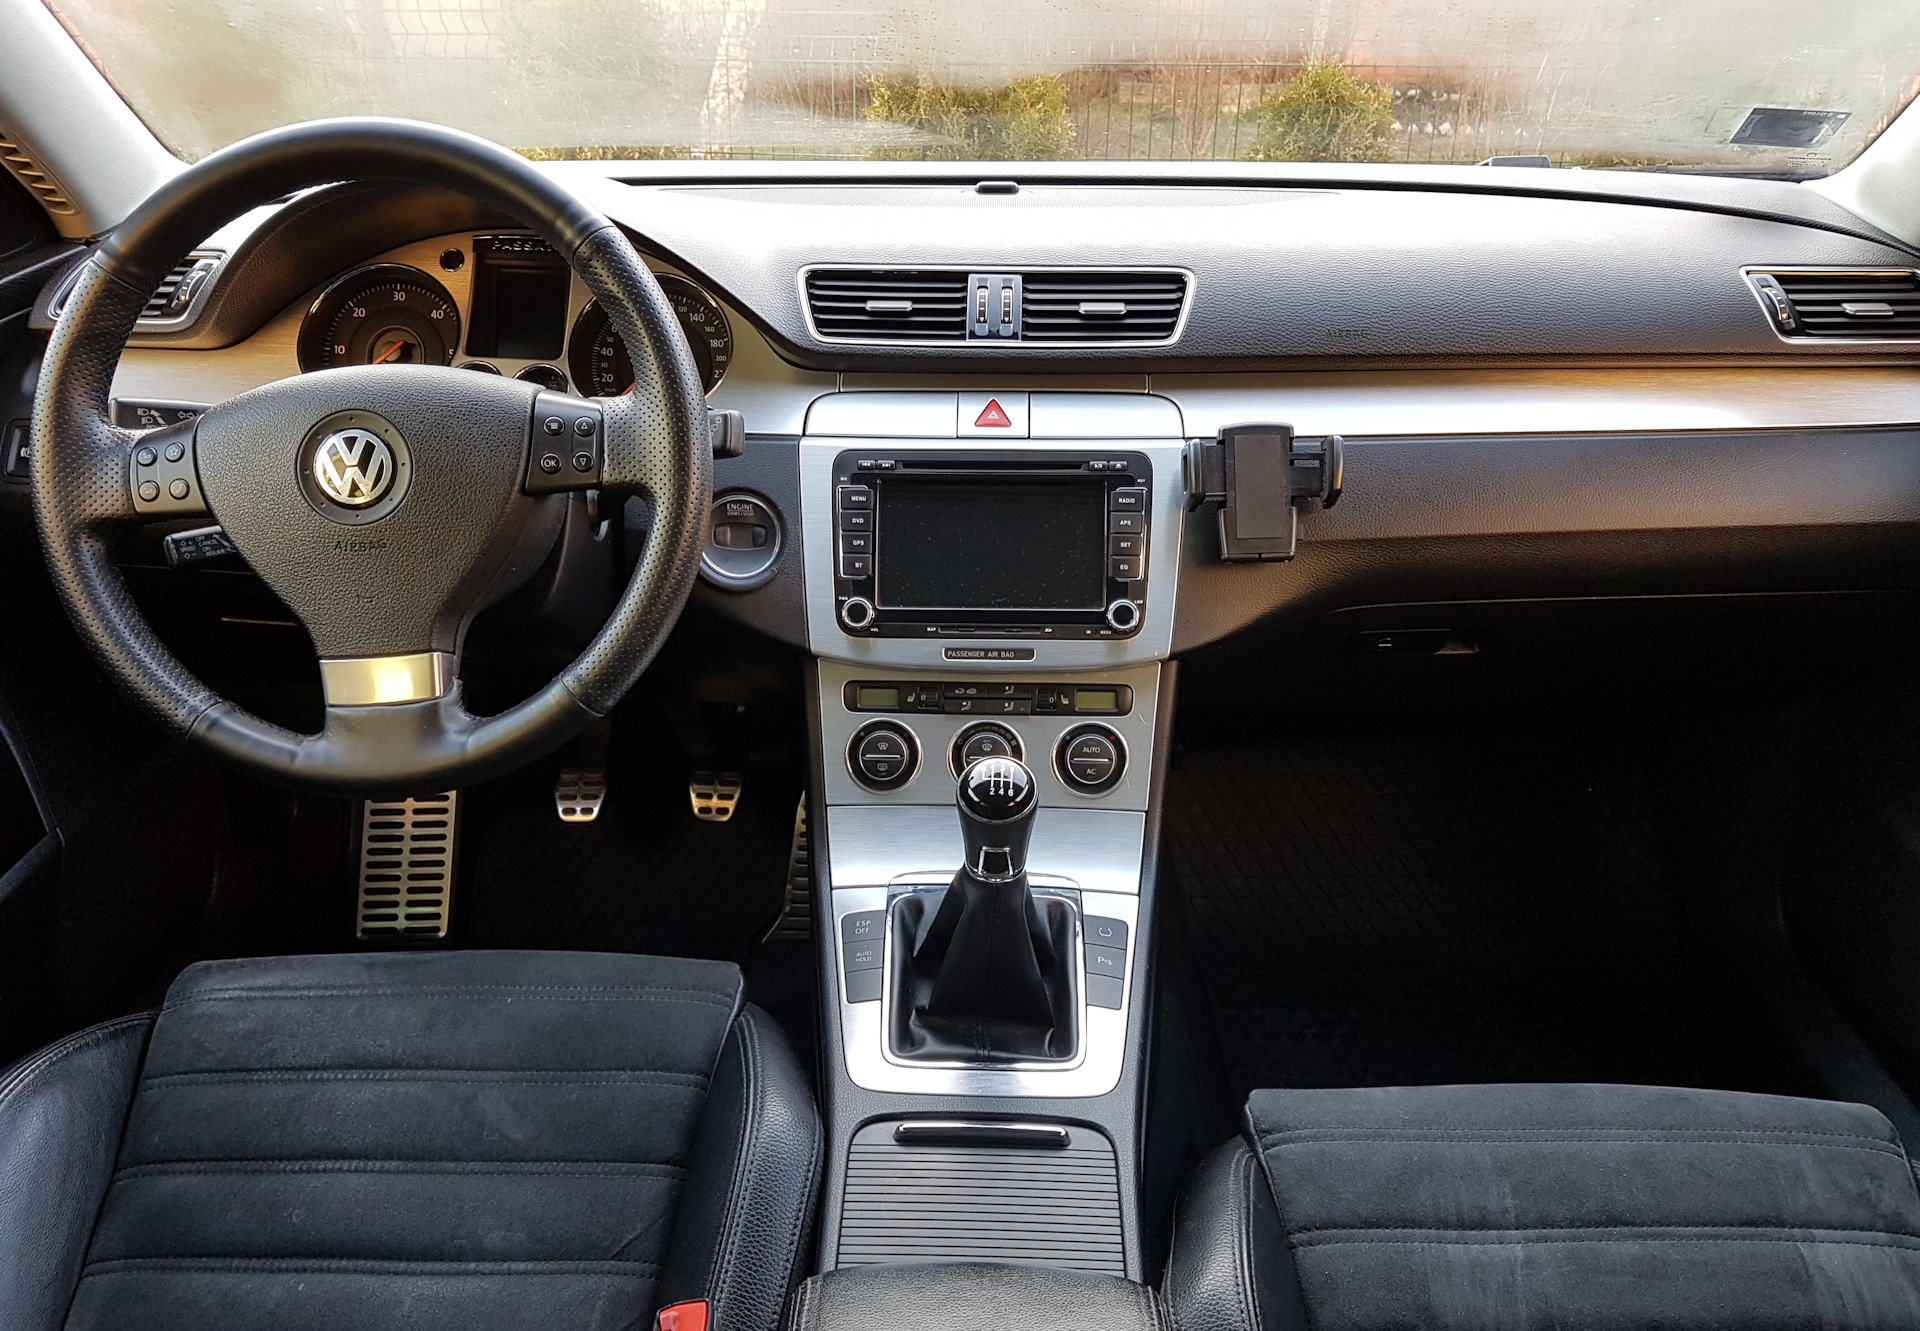 Пассат б6 2008 год. VW Passat b6 салон. Фольксваген Пассат б6 2008 салон. WV Passat b6 салон. Volkswagen Passat b6 Interior.